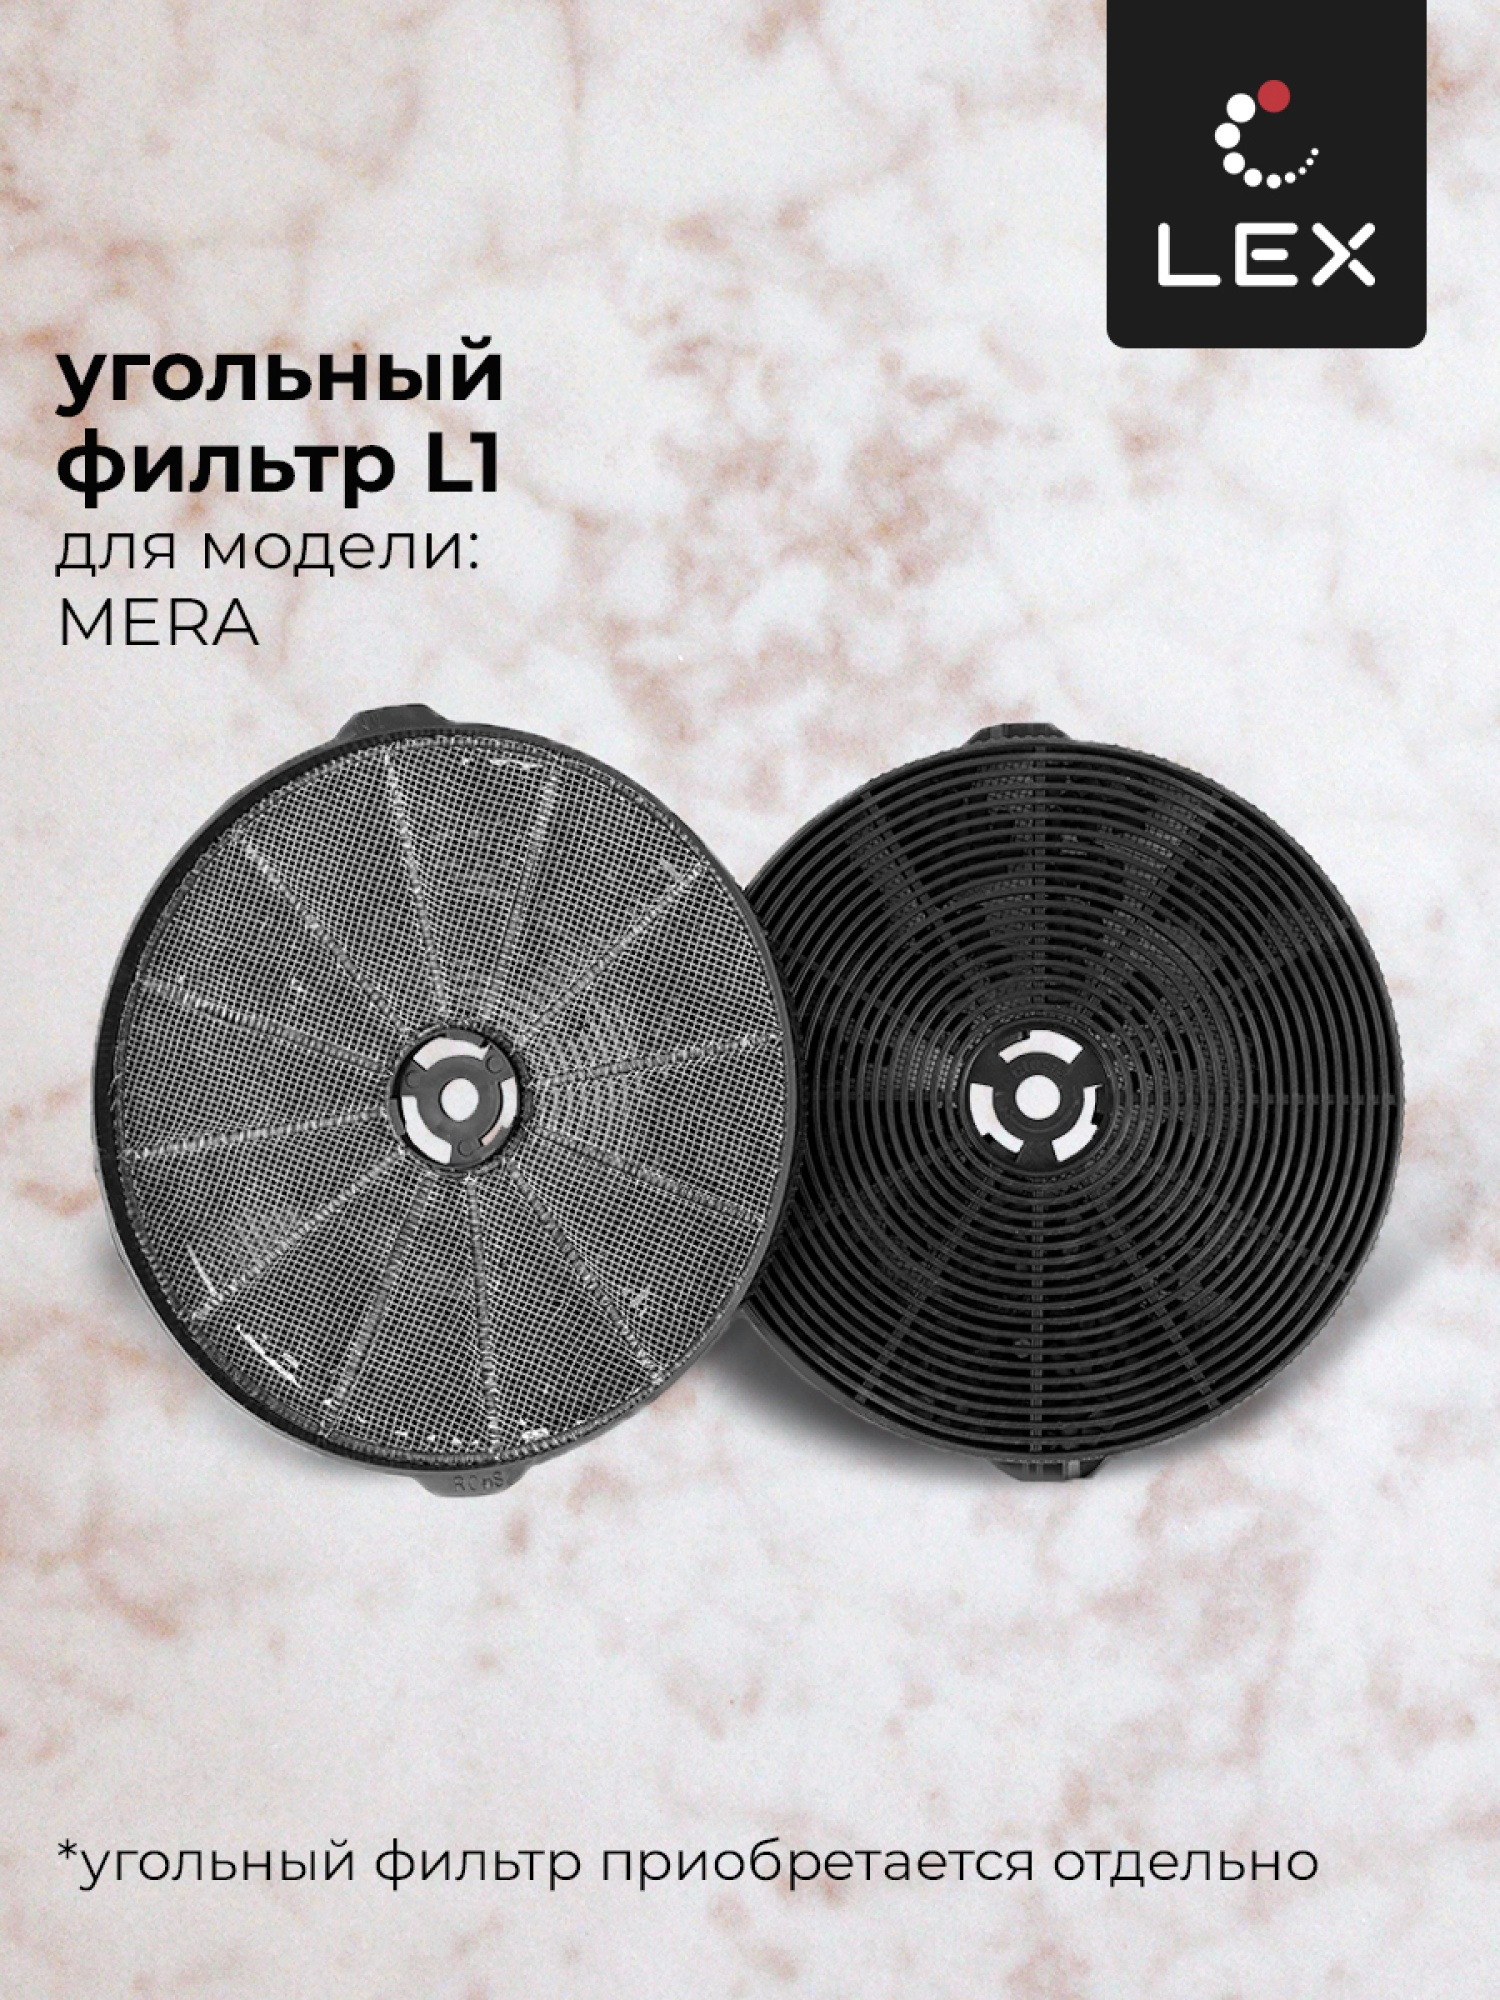 Наклонная кухонная вытяжка LEX Mera 600 Black